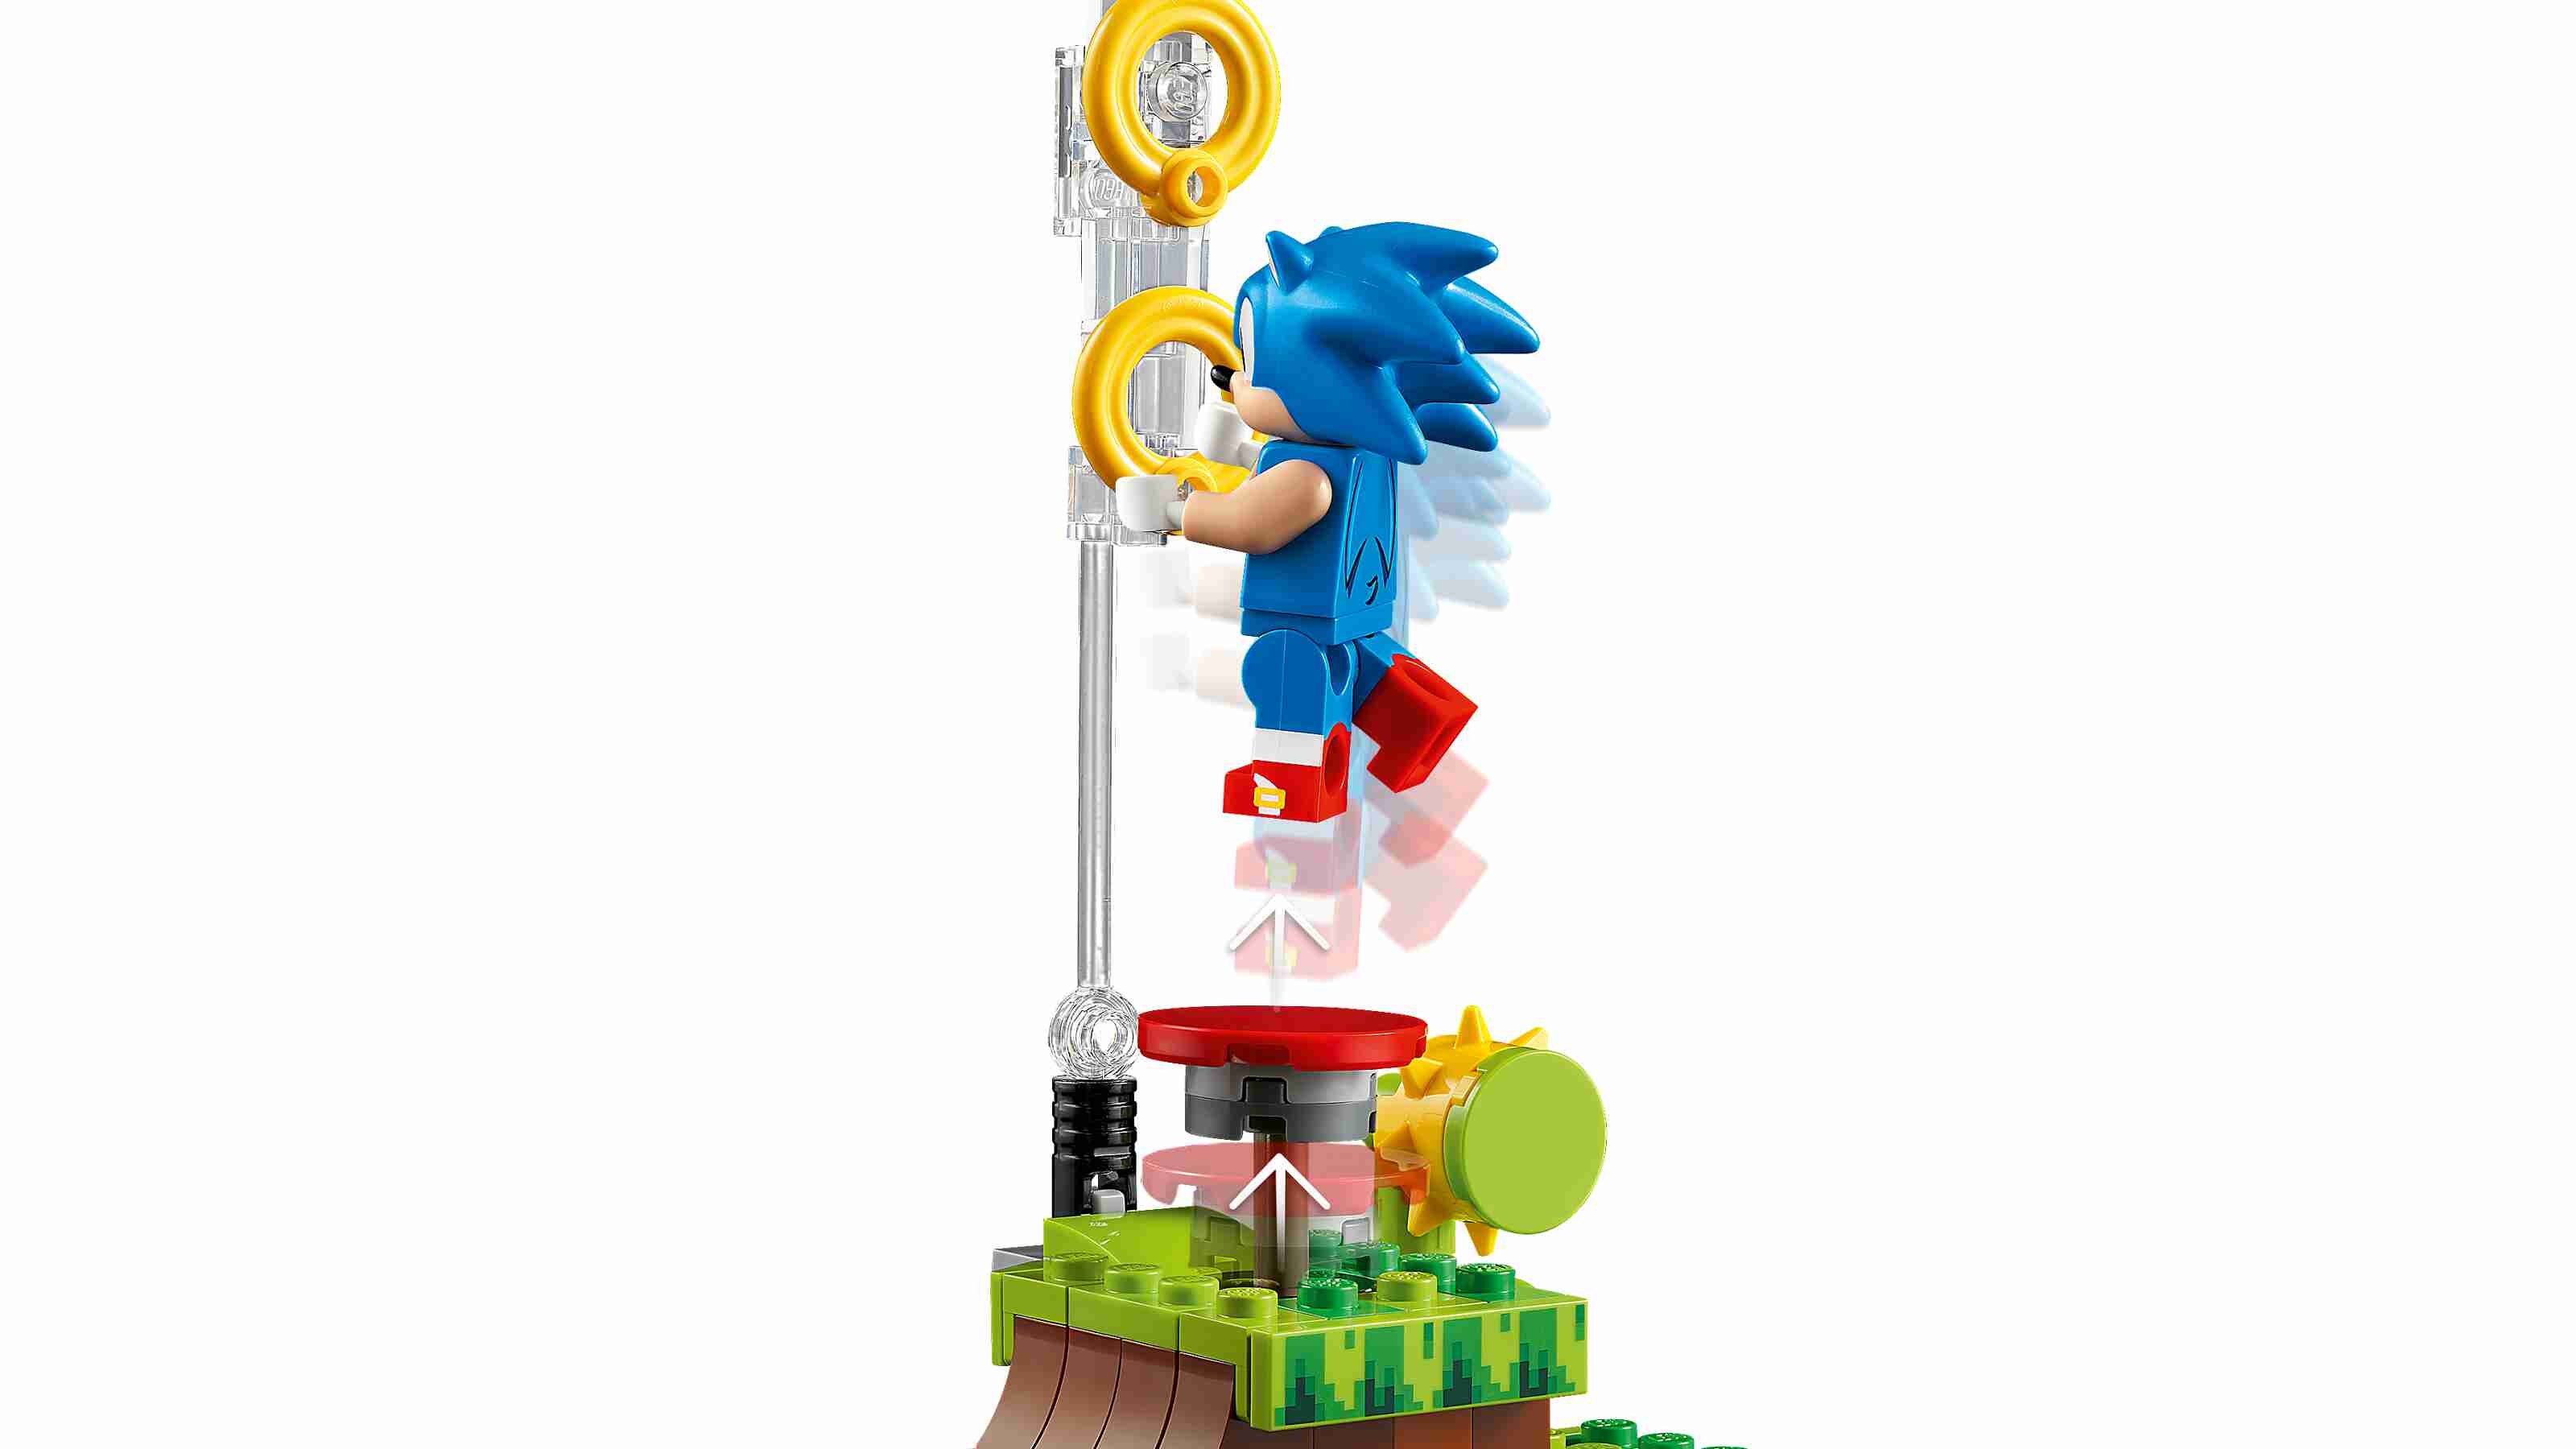 LEGO 21331 Ideas  Sonic The Hedgehog – Green Hill Zone, Dr. Eggmann, Egg-Mobil